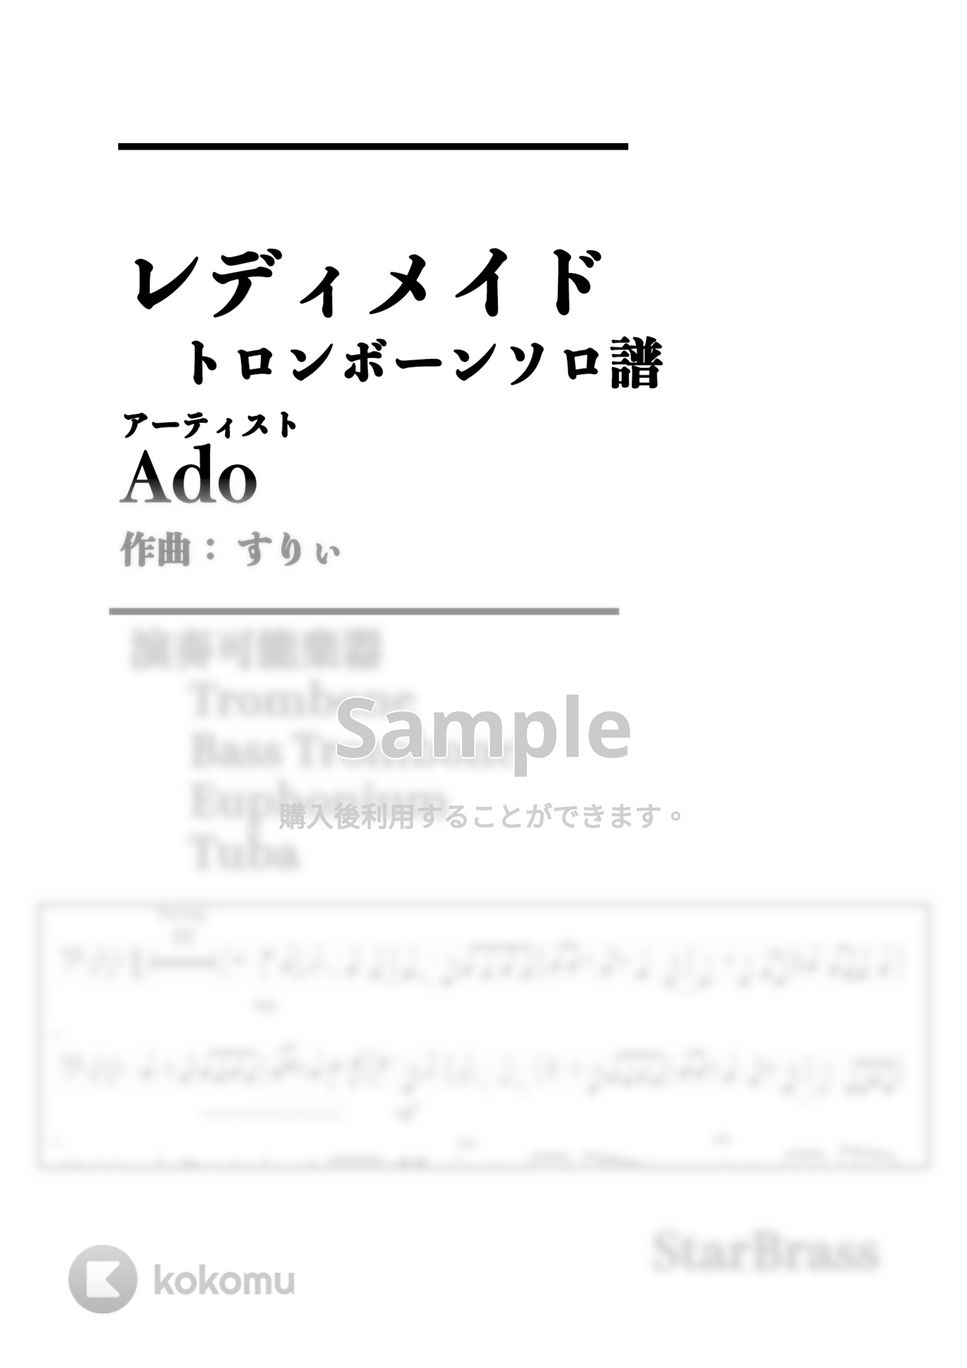 Ado - レディメイド (-Trombone Solo- 原キー) by Creampuff